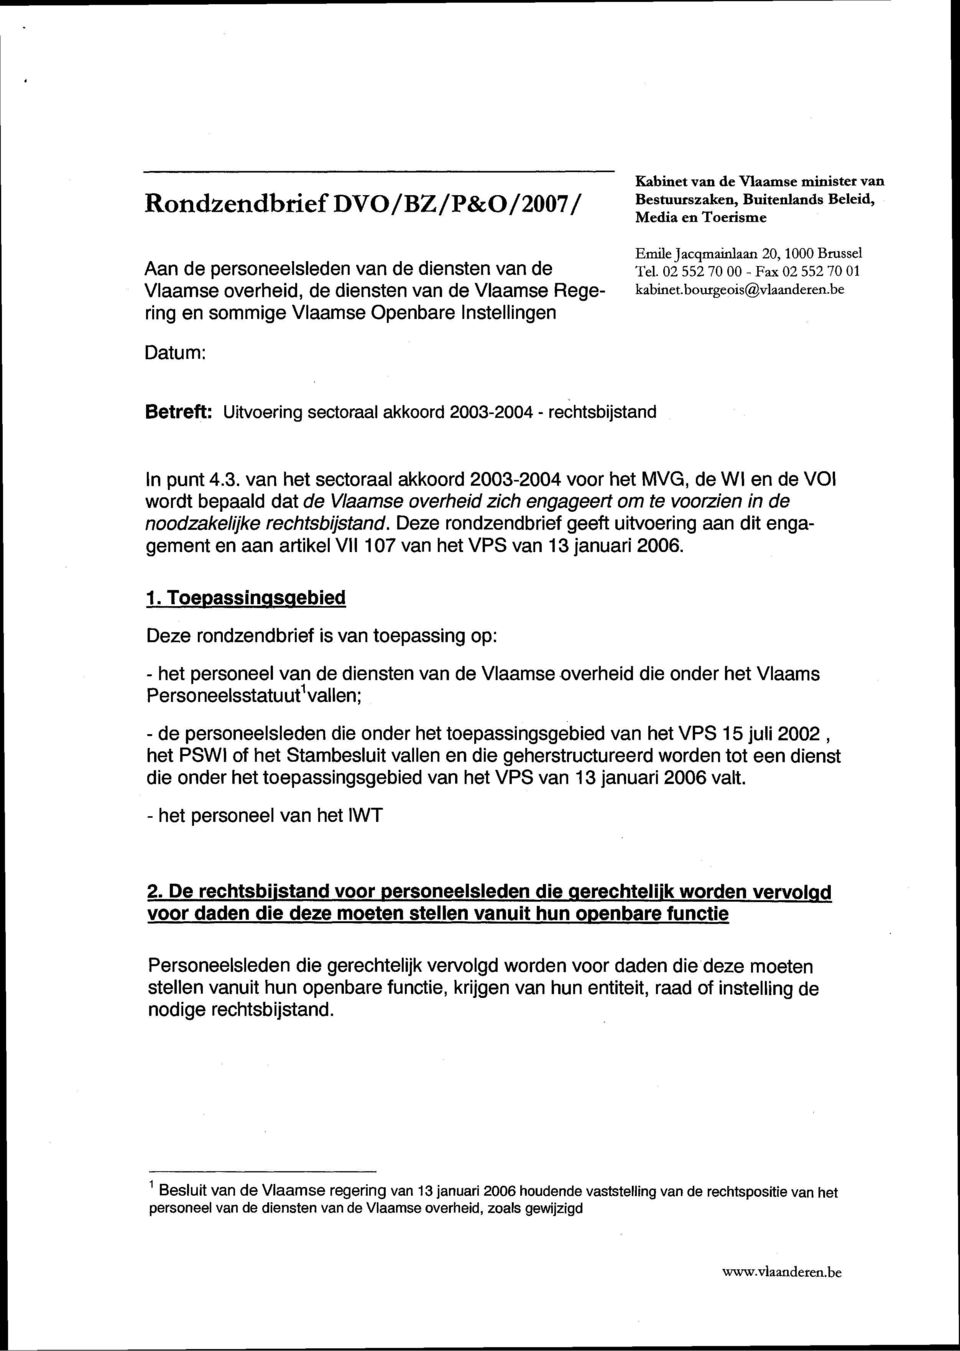 be ring en sommige Vlaamse Openbare Instellingen Datum: Betreft: Uitvoering sectoraal akkoord 2003-